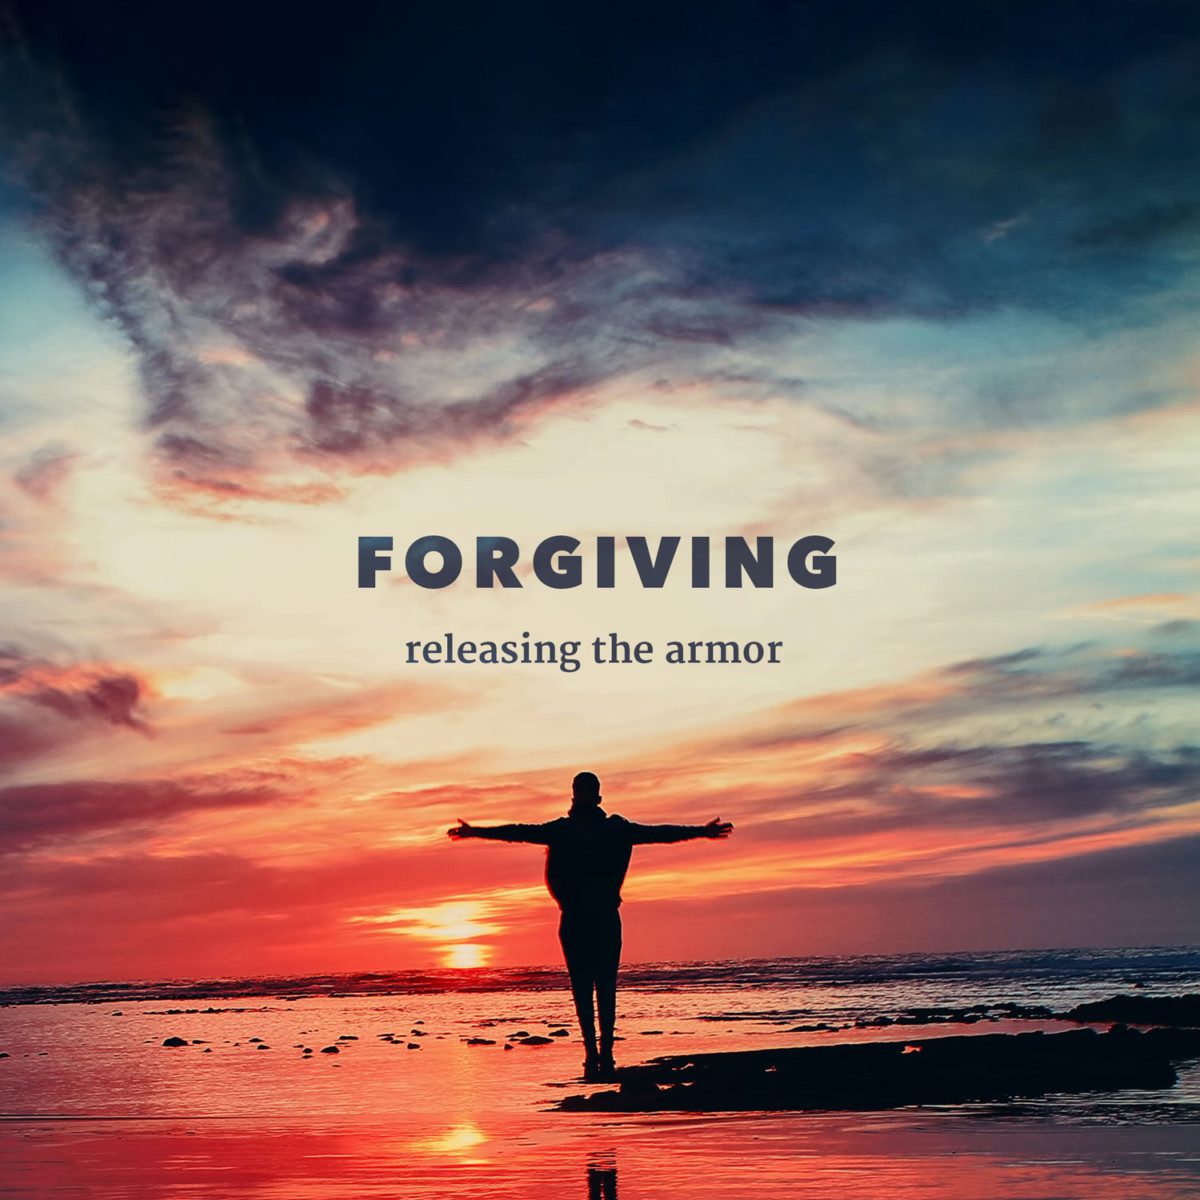 FORGIVING - releasing the armor